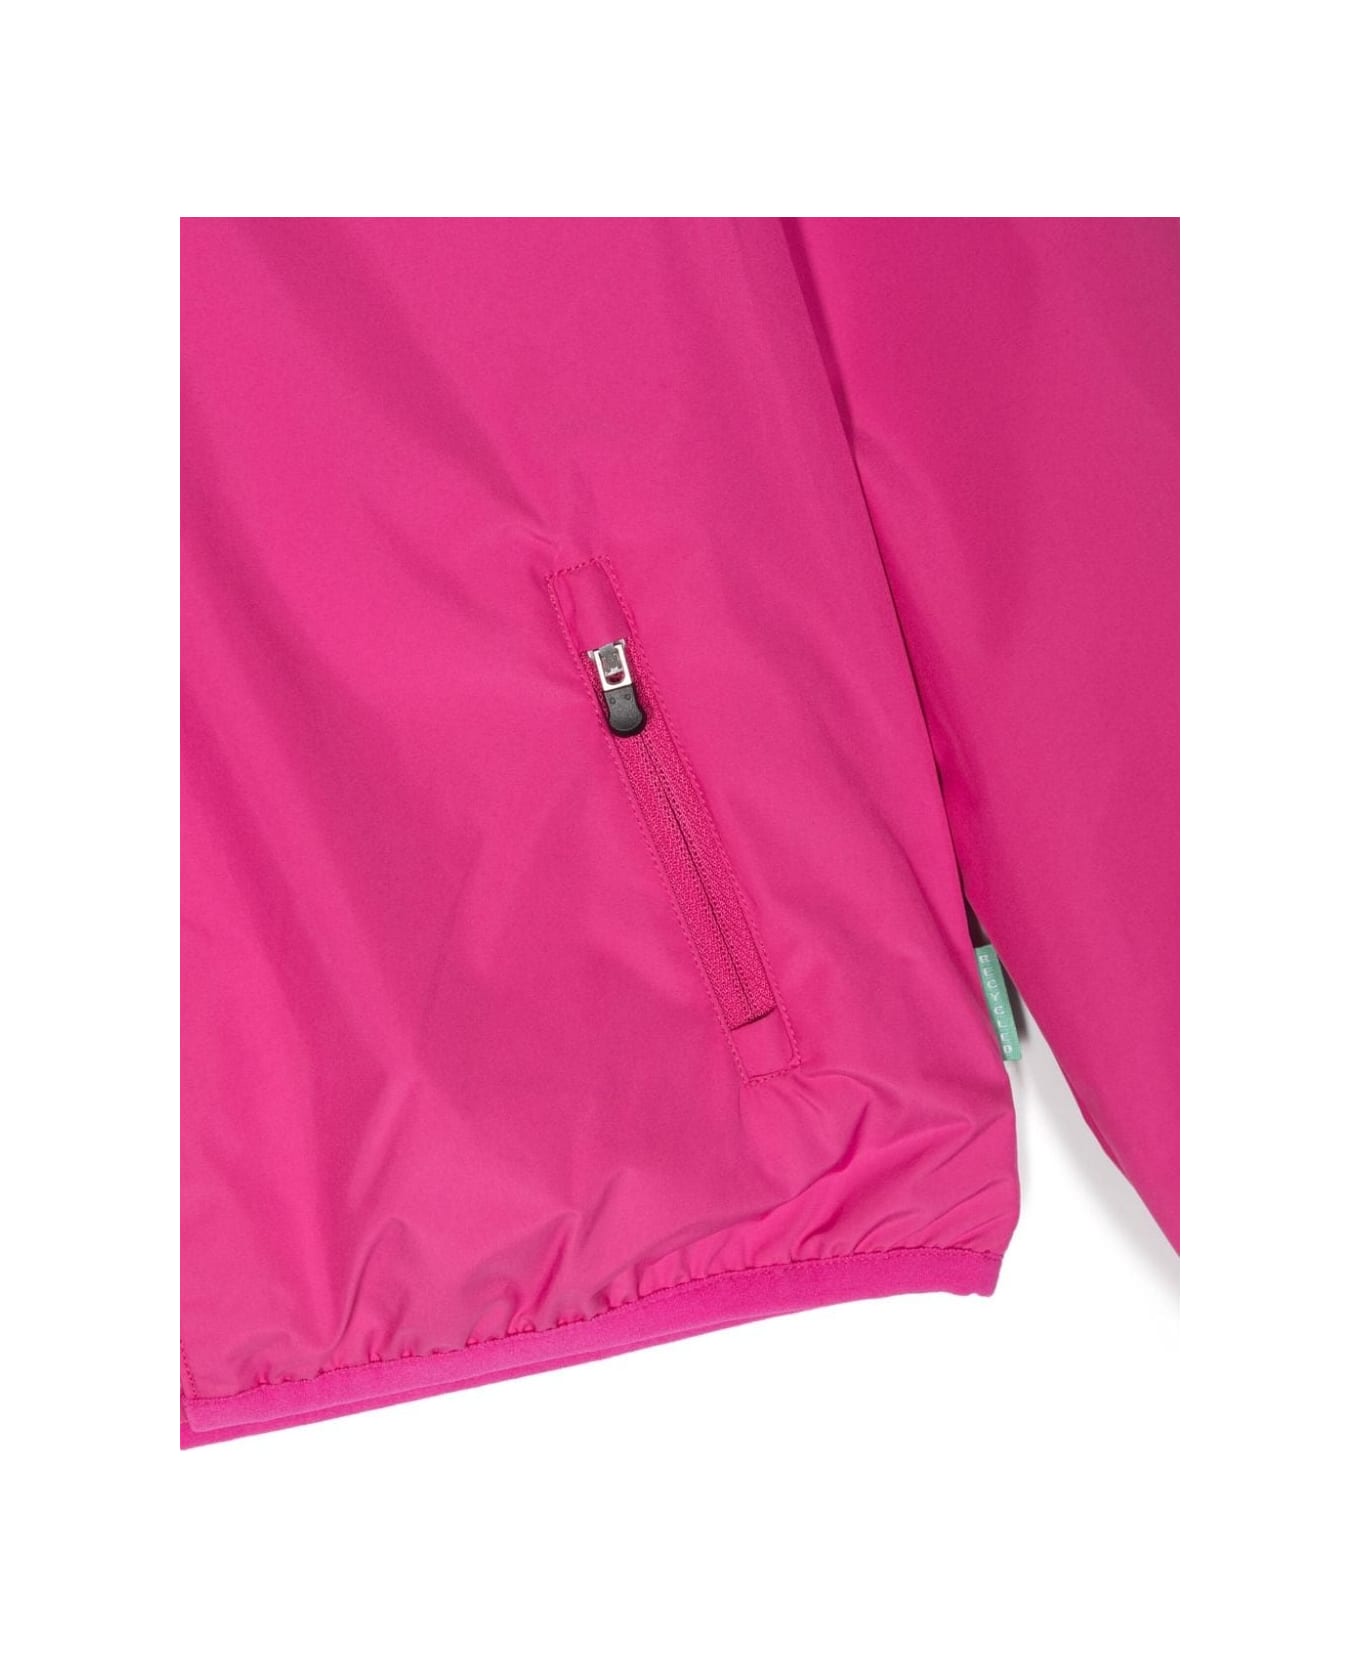 Save the Duck Hooded Windbreaker Jacket In Fuchsia - Pink コート＆ジャケット